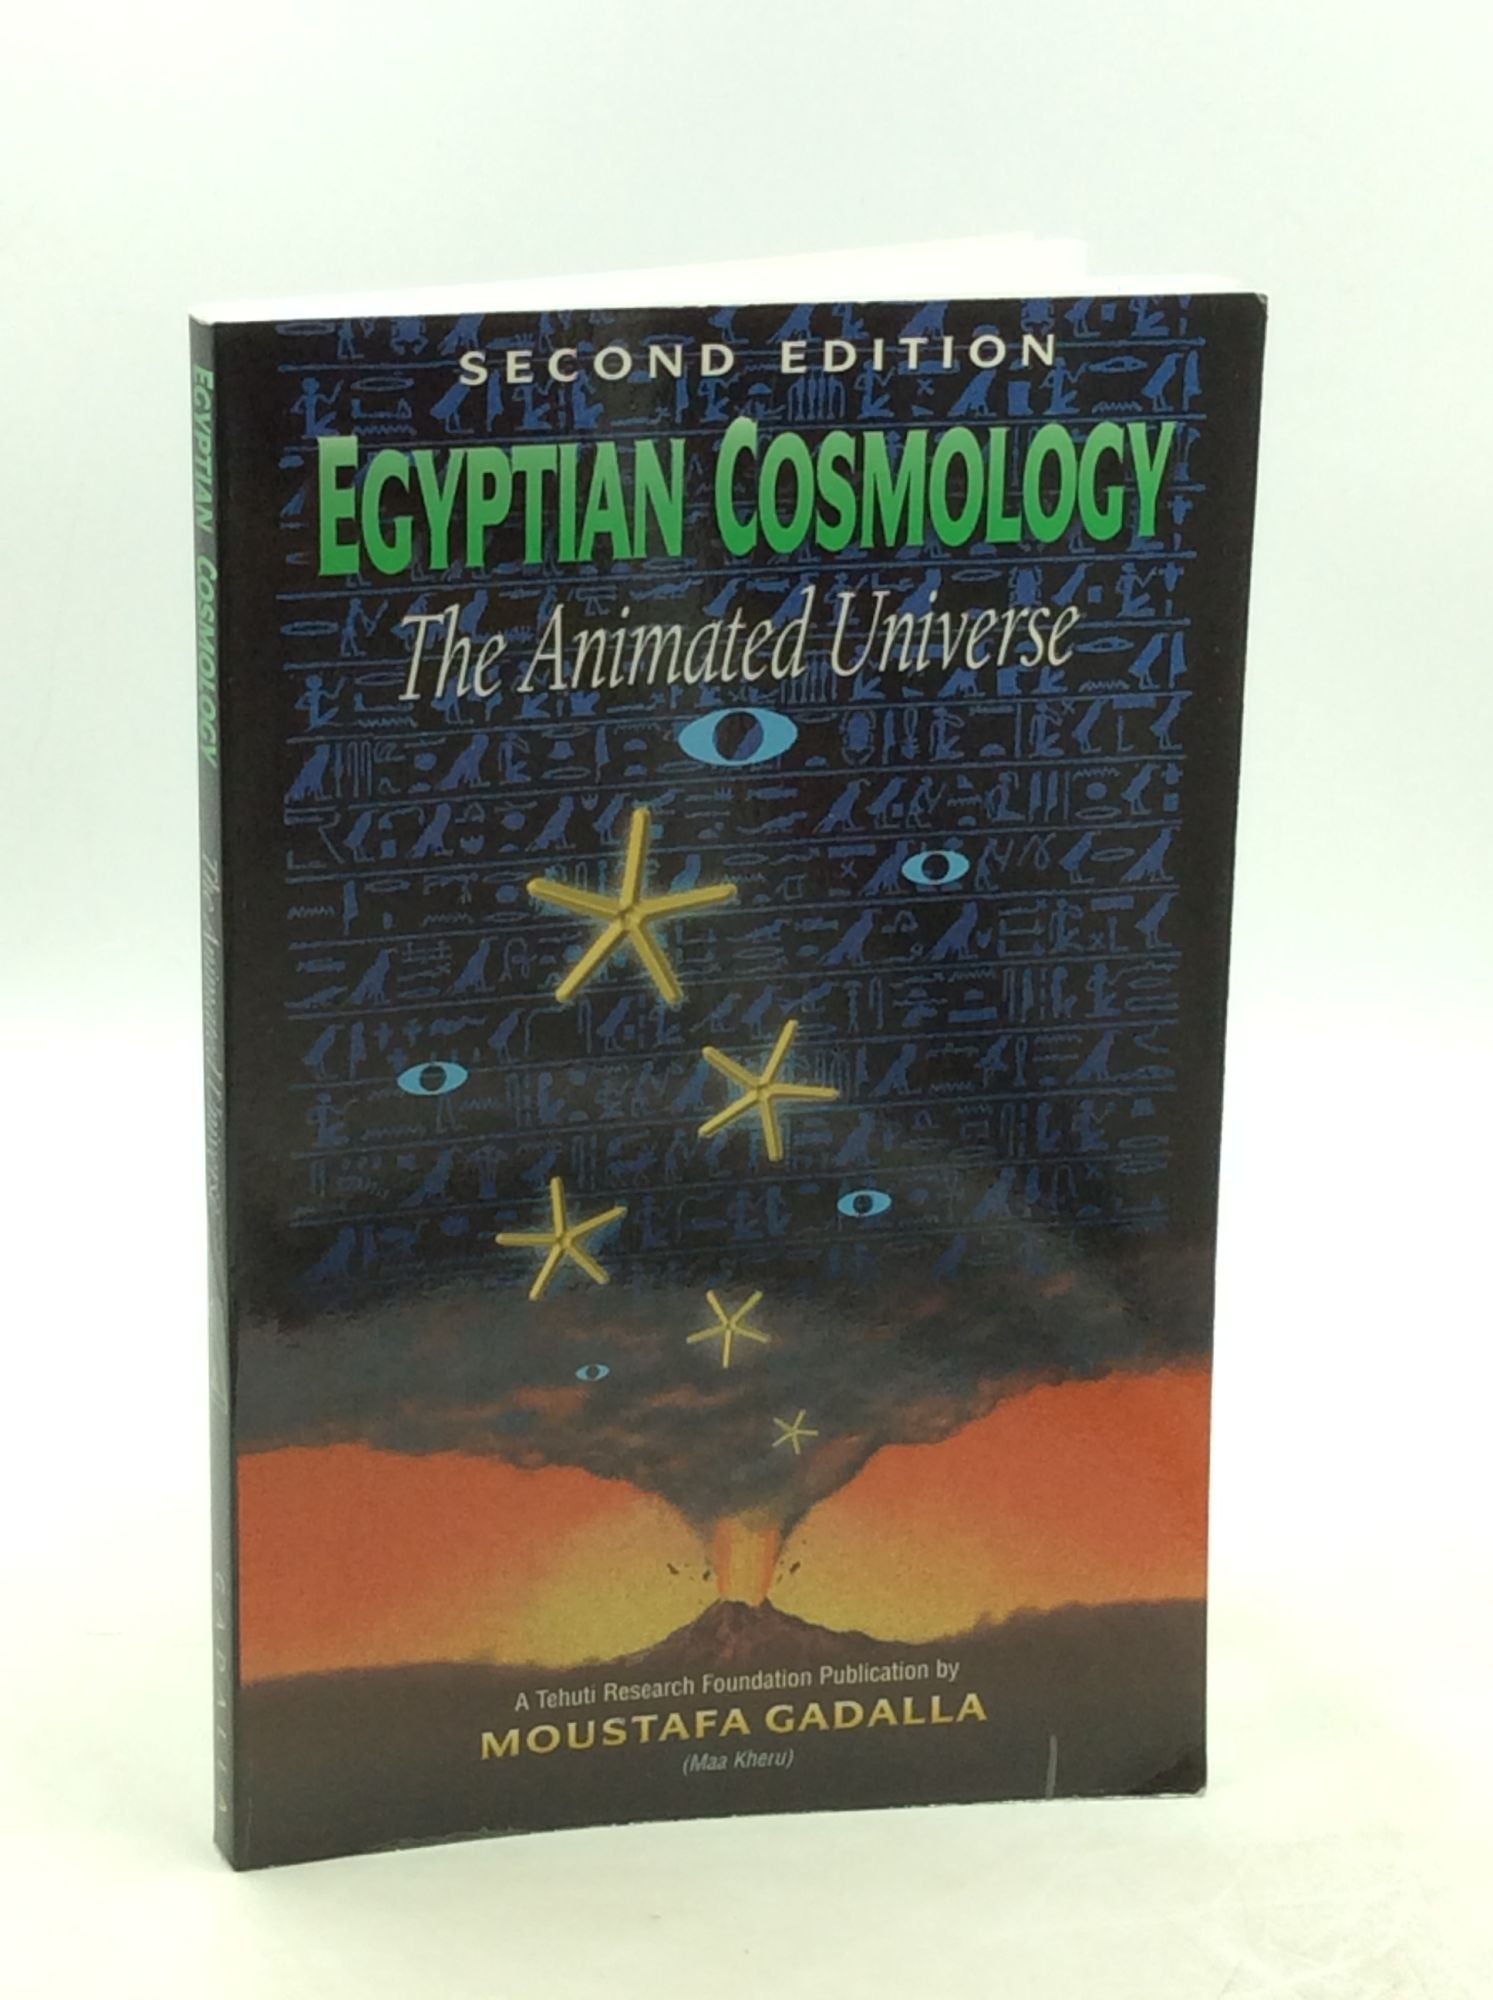 Moustafa Gadalla - Egyptian Cosmology: The Animated Universe